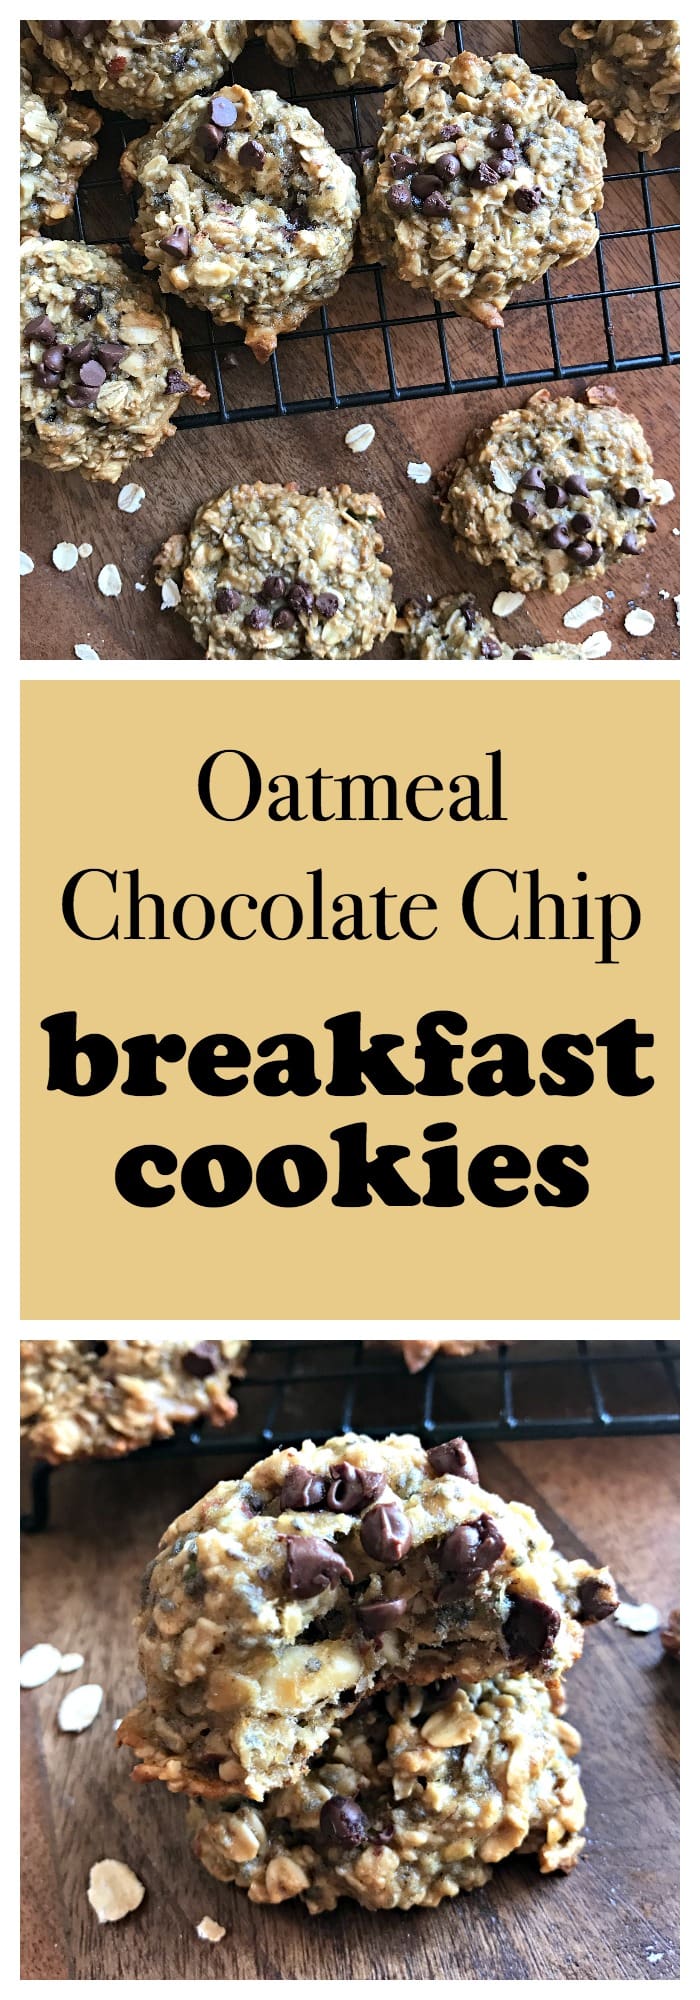 Oatmeal Chocolate Chip Breakfast Cookies 2